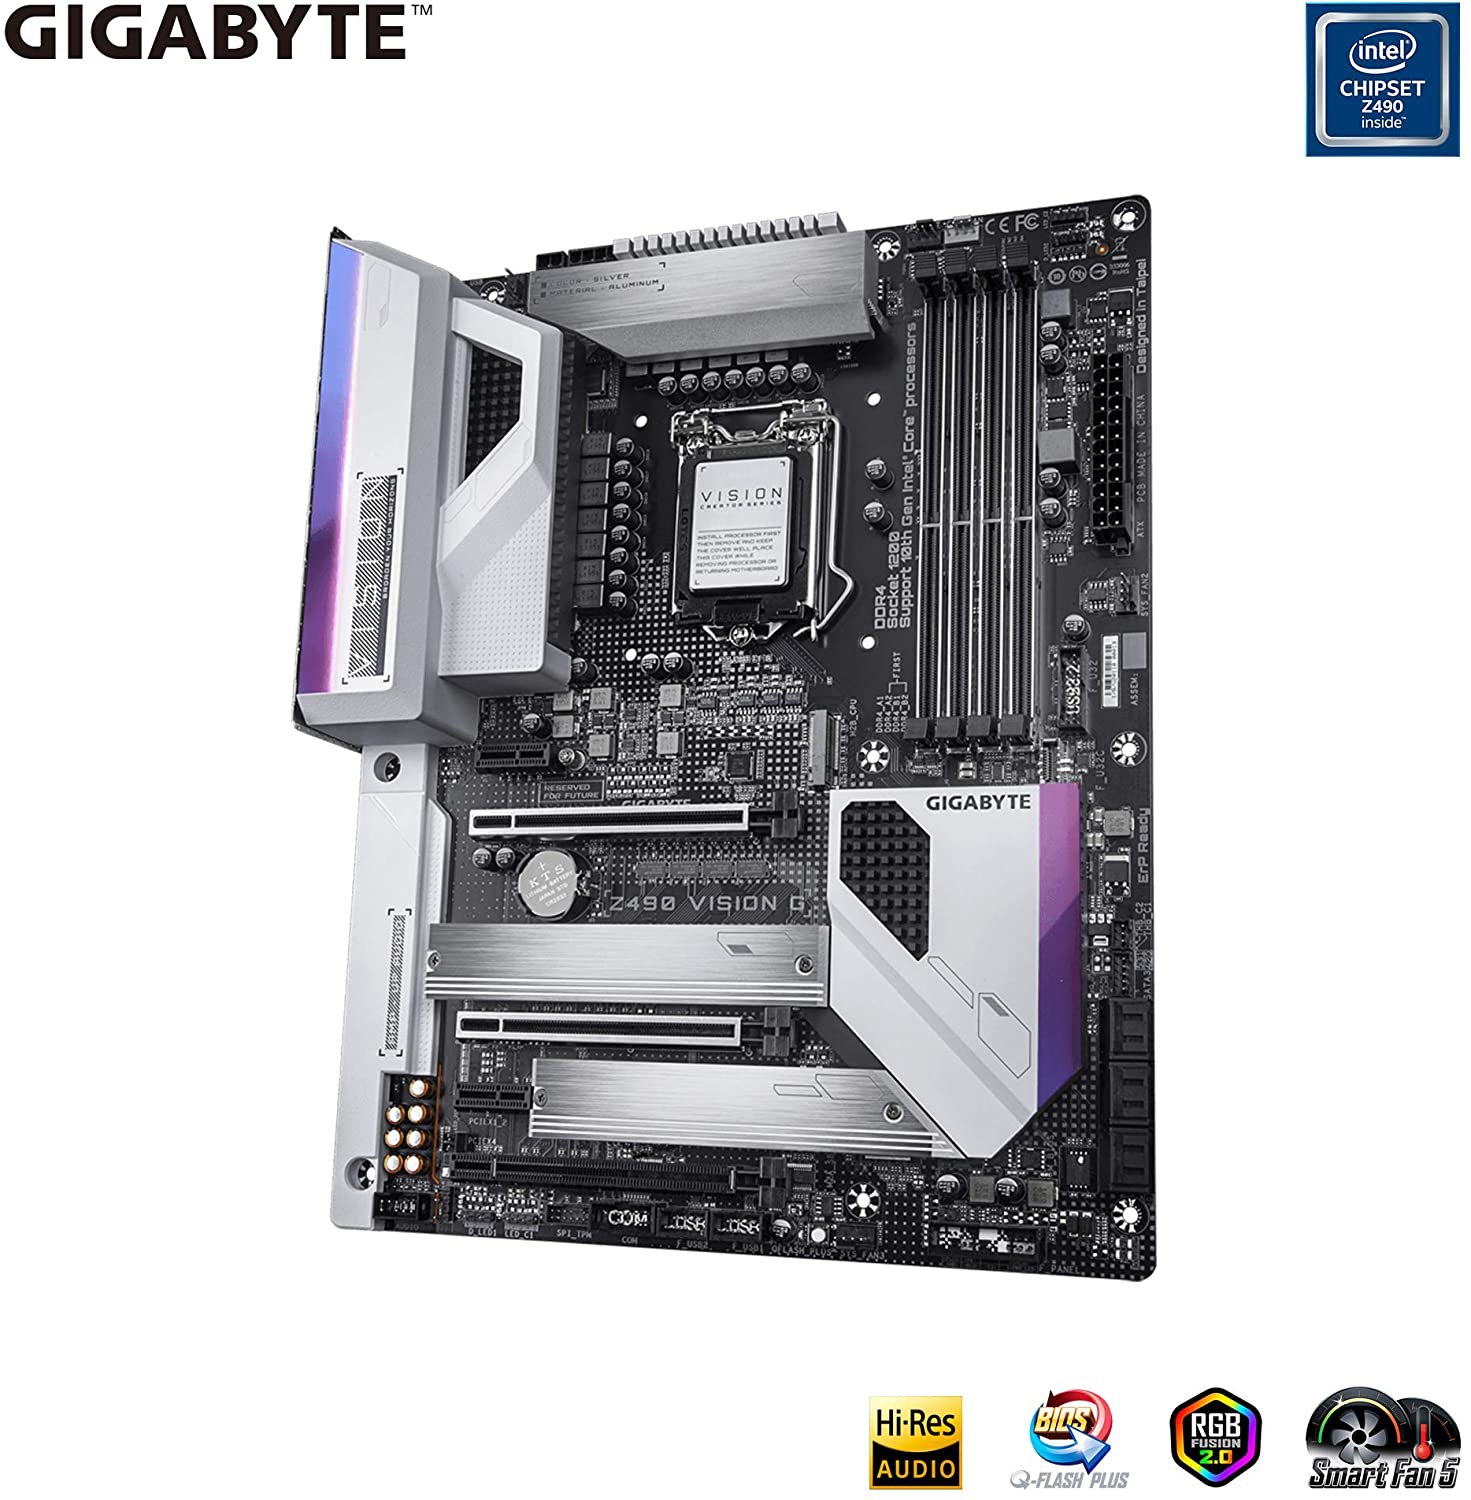 GIGABYTE Z490 Vision G (Intel Lga1200/Z490/Atx/2Xm.2/Realtek Alc1220-Vb/Intel LAN/SATA 6Gb/S/Usb 3.2 Gen 2/SLI Support/Hdmi/Motherboard)